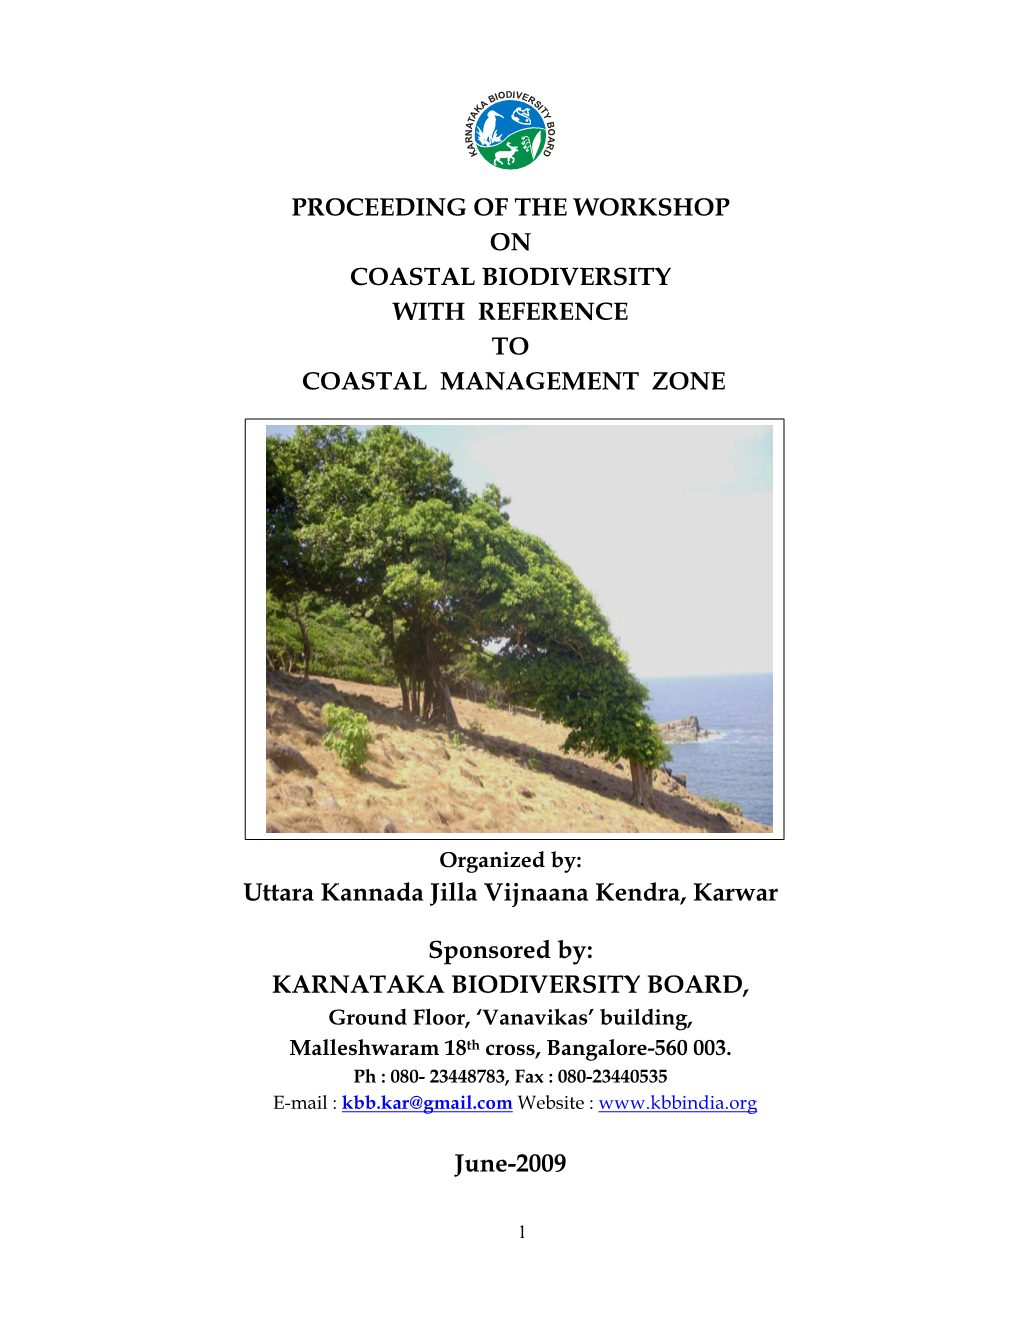 Proceedings of Workshop on Coastal Biodiversity